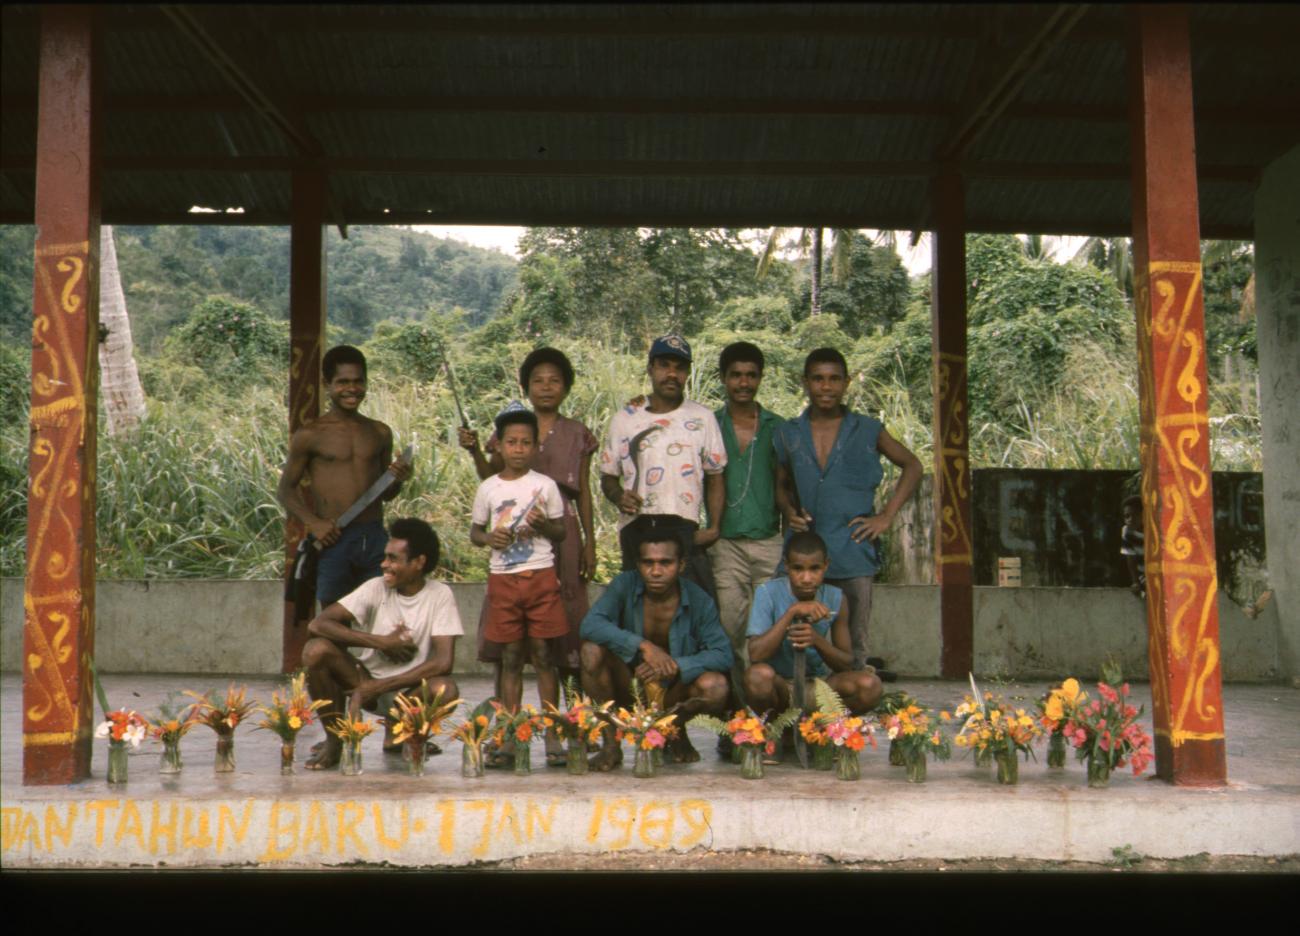 BD/166/368 - 
Papuas en vaasjes met bloemen
